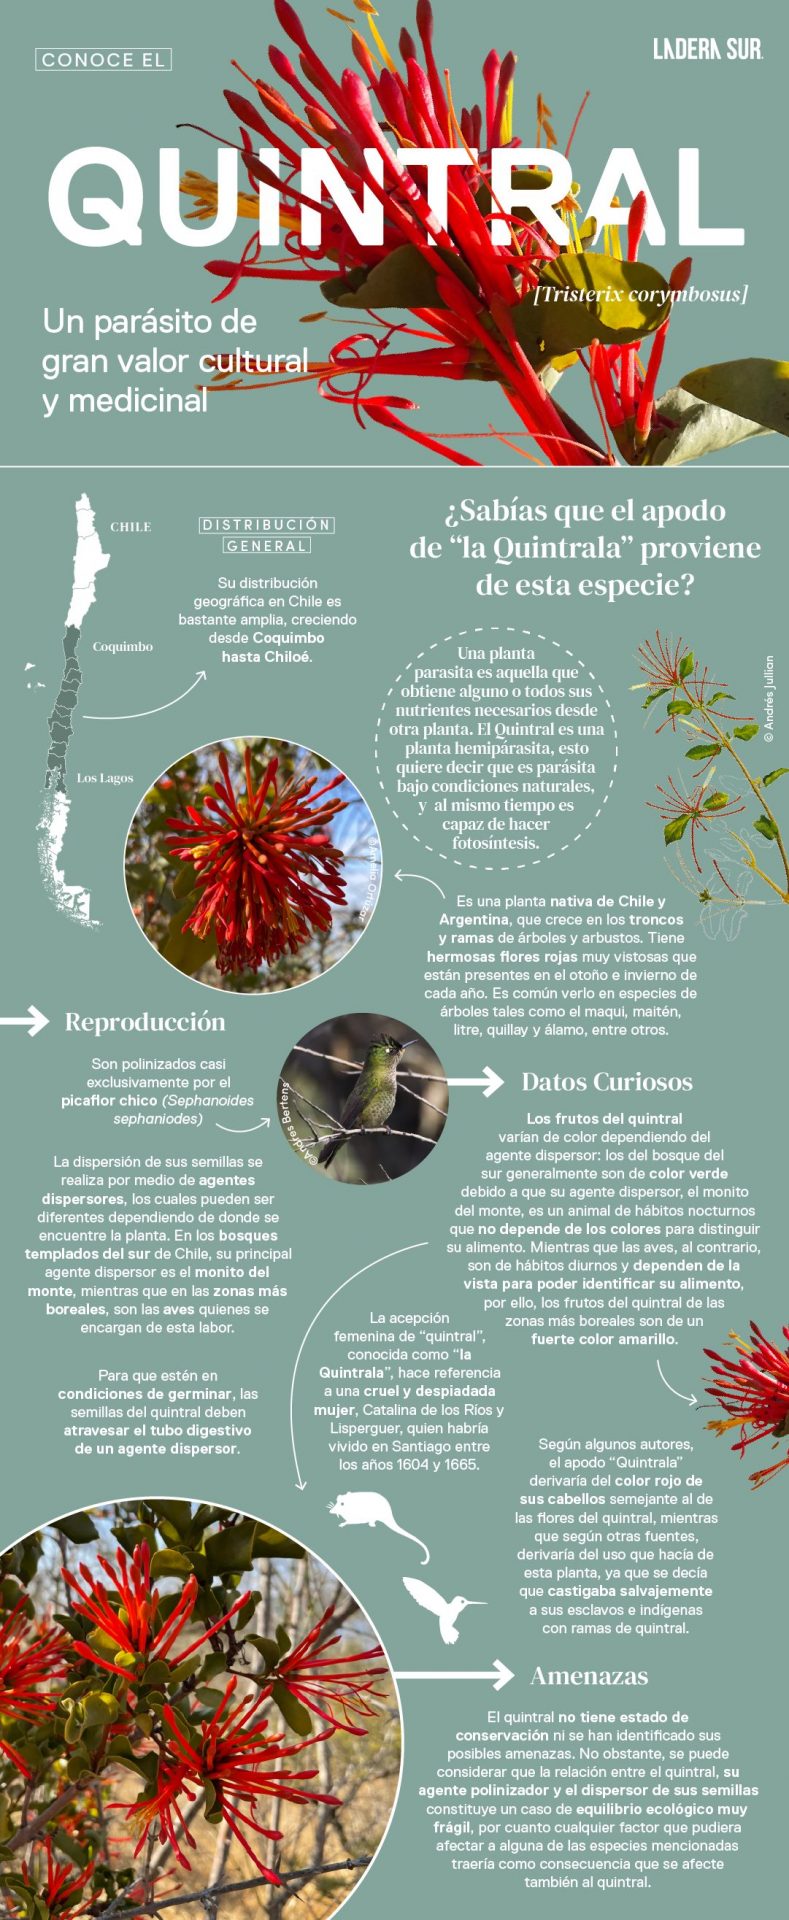 Infografia Ladera Sur - Amelia Ortúzar